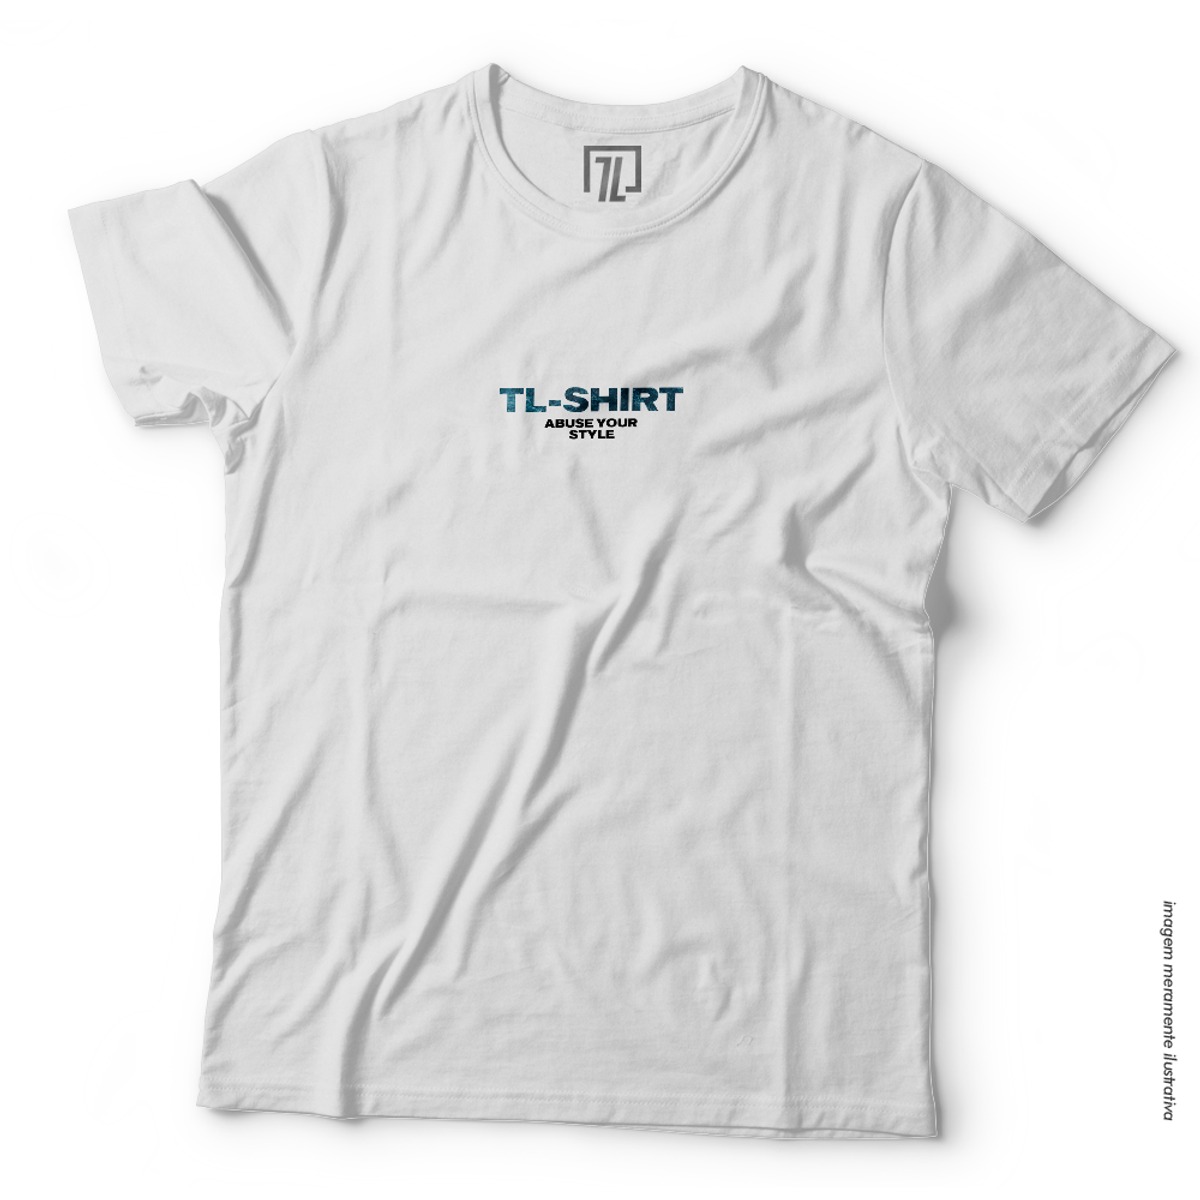 Nome do produto: Camiseta UNISSEX TL-Shirt Abuse Your Style